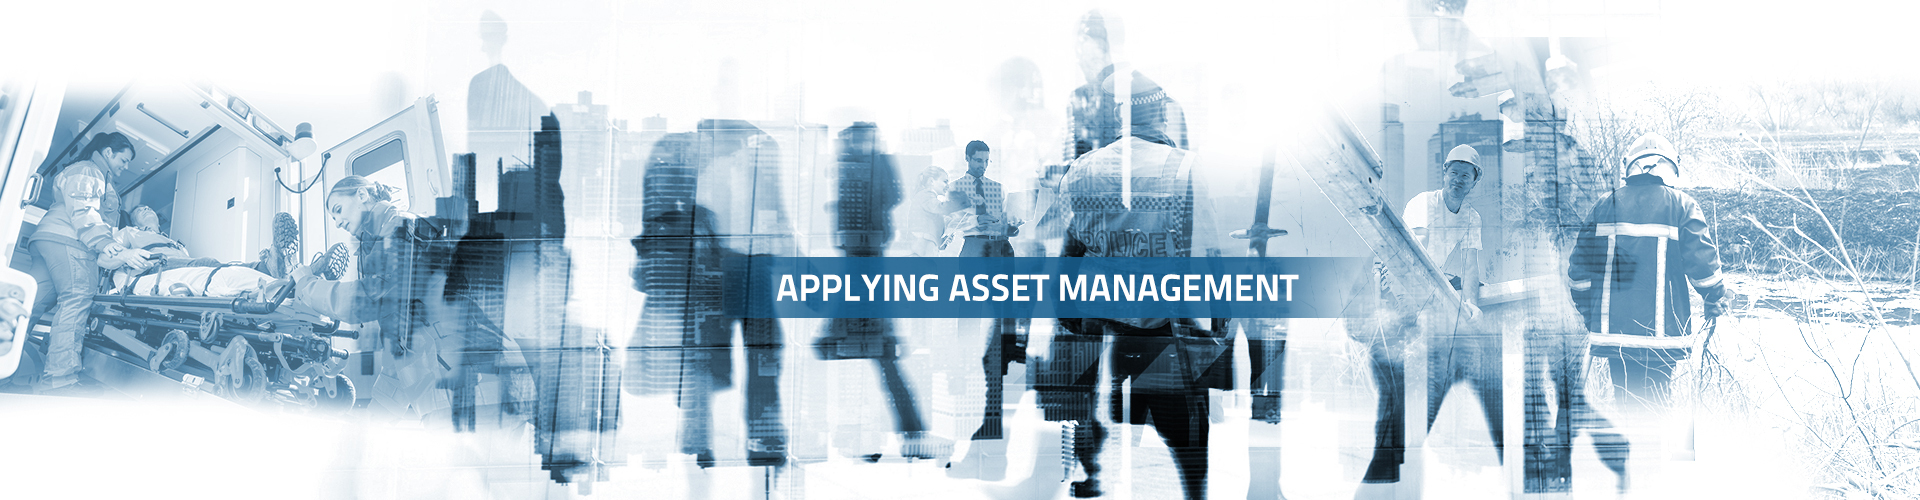 Applying Asset Management